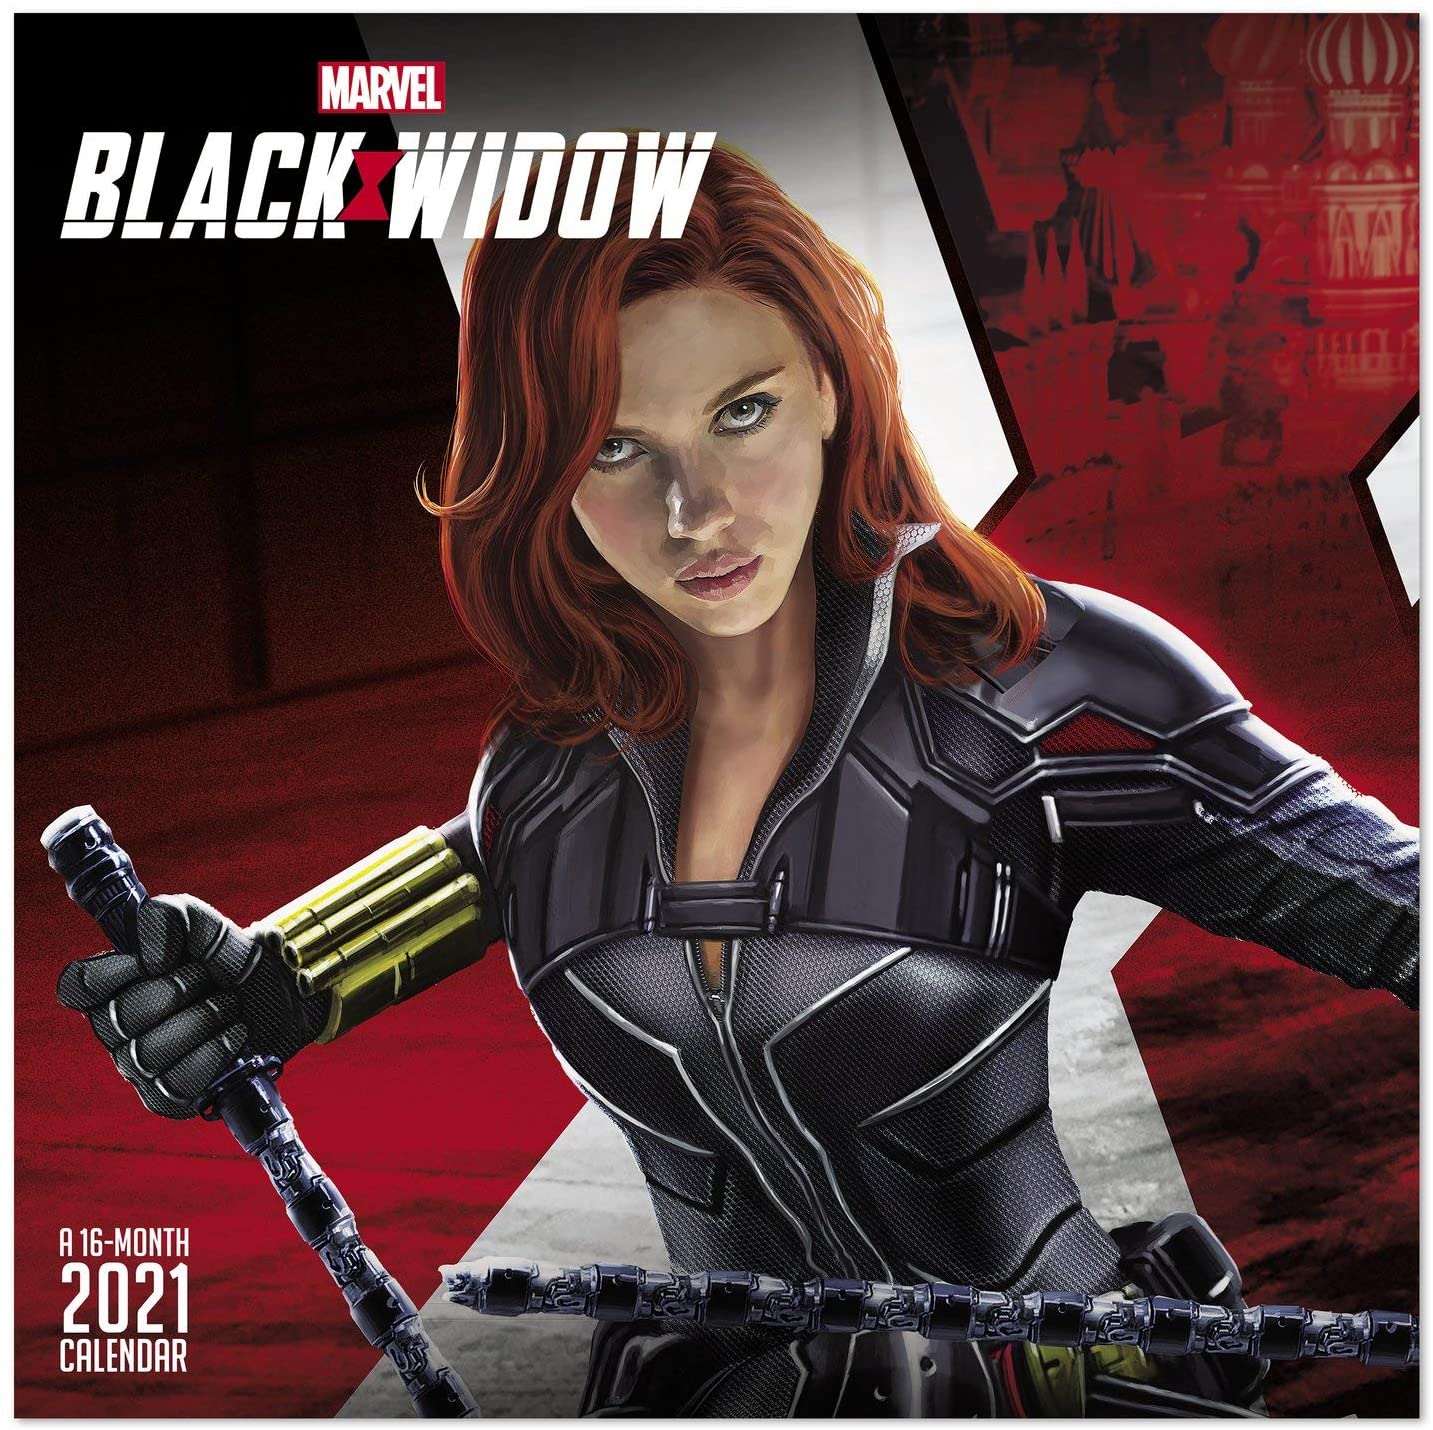 Amazon : Mead 2021 Black Widow Wall Calendar, 12 x 12, Monthly